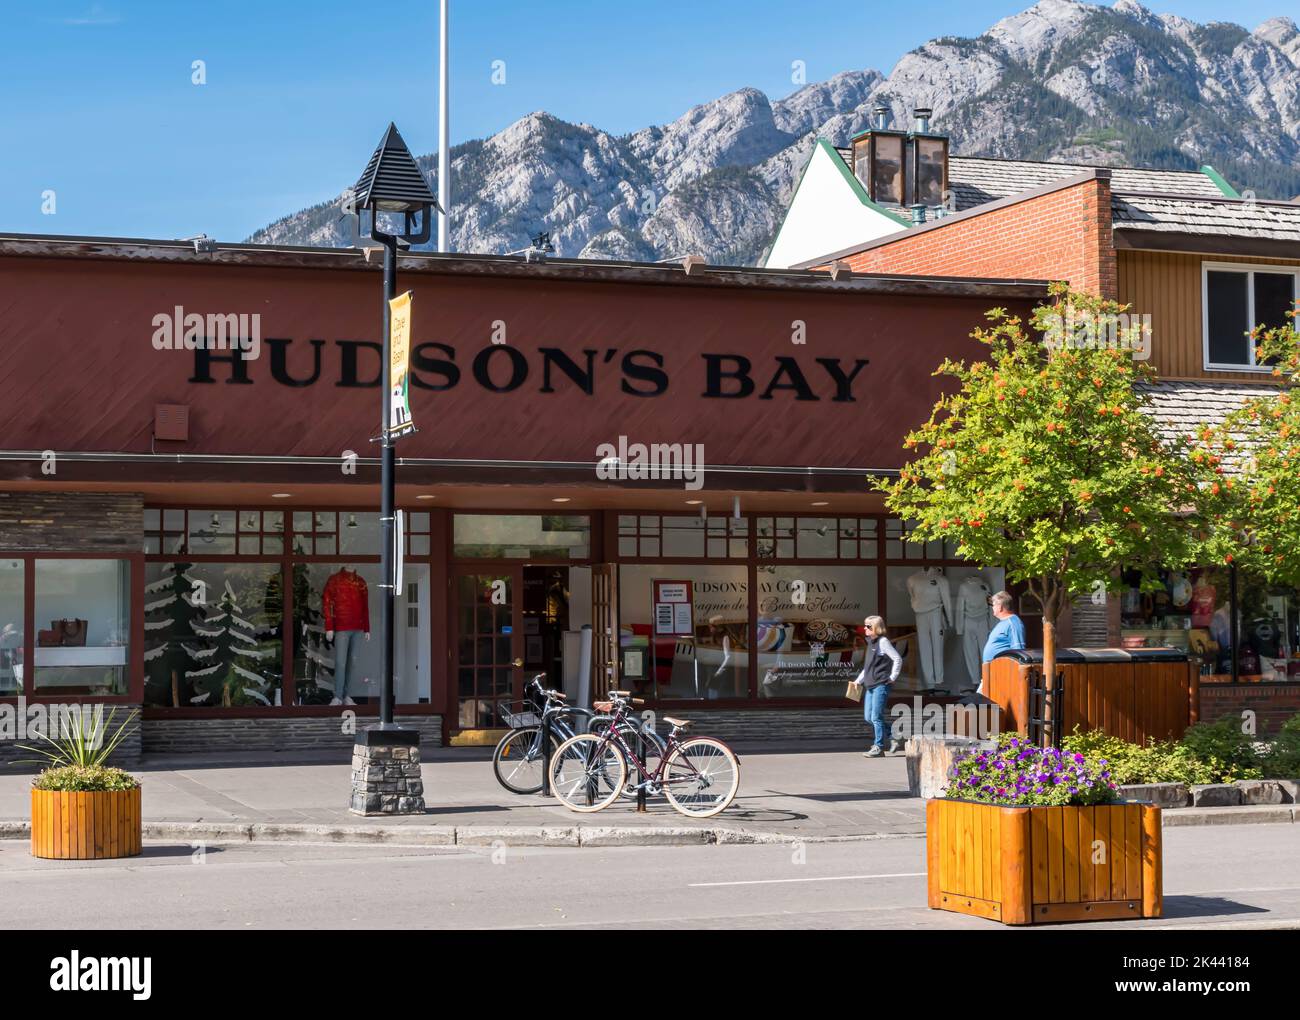 The Hudson Bay Store on Banff Avenue in Banff, Alberta, Canada Stock Photo